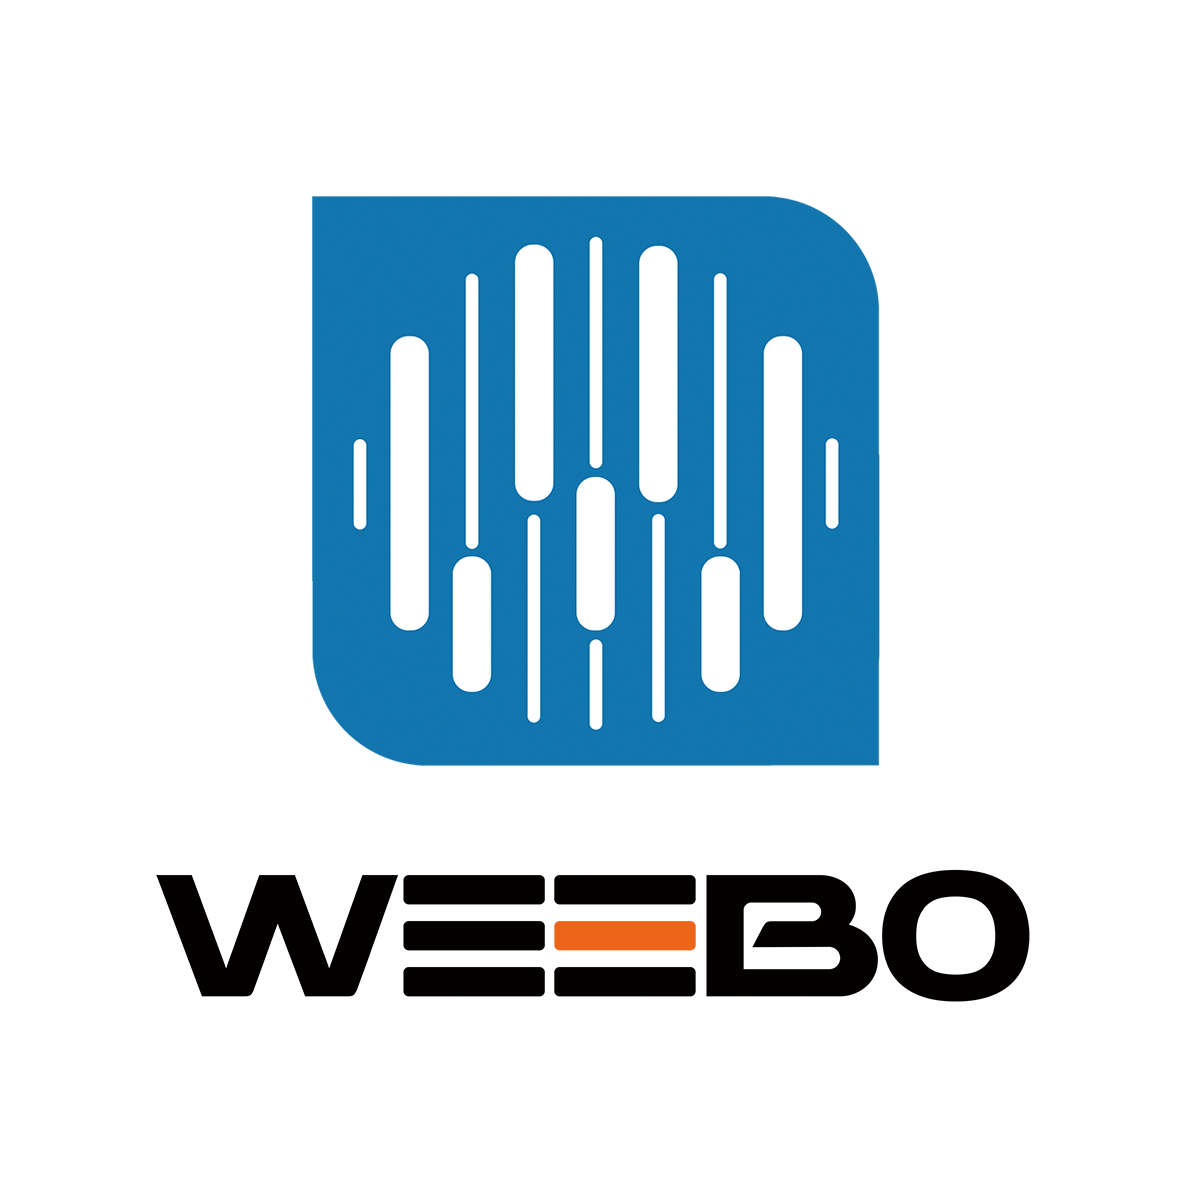 Weebo Pte Ltd